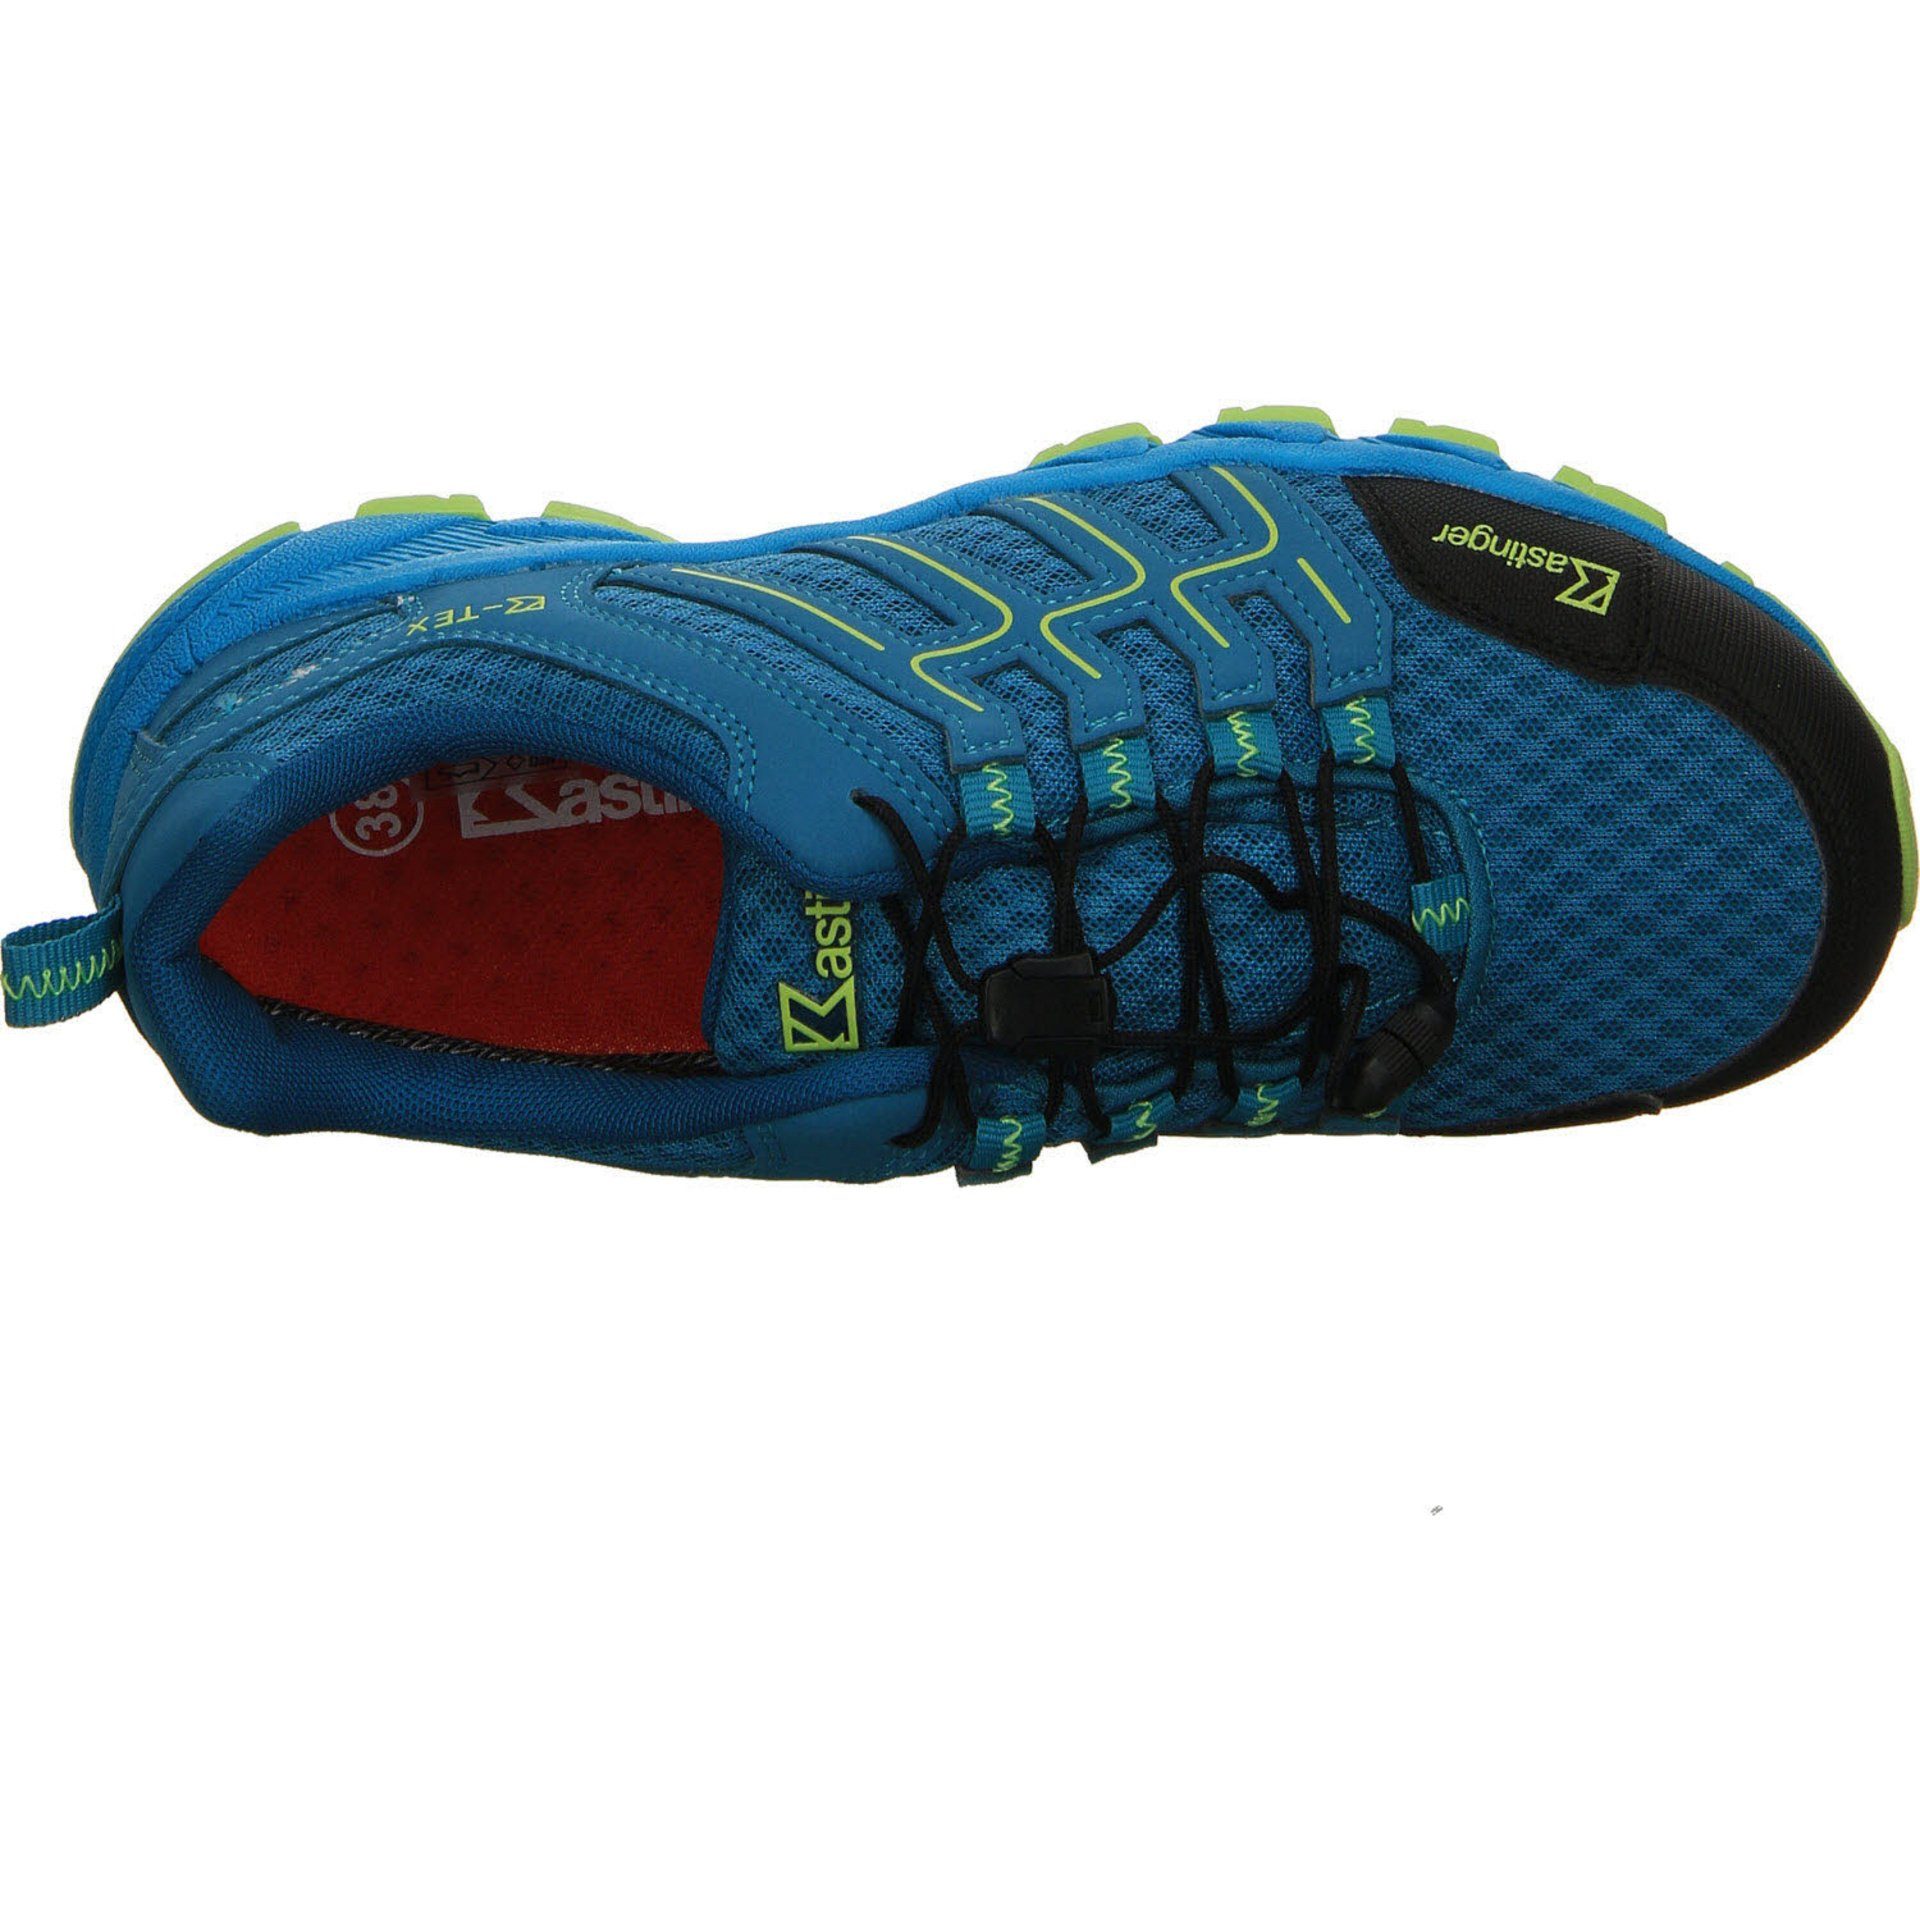 Kastinger Damen petrol/black Trailrunner Outdoor Synthetikkombination Outdoorschuh Outdoorschuh Schuhe